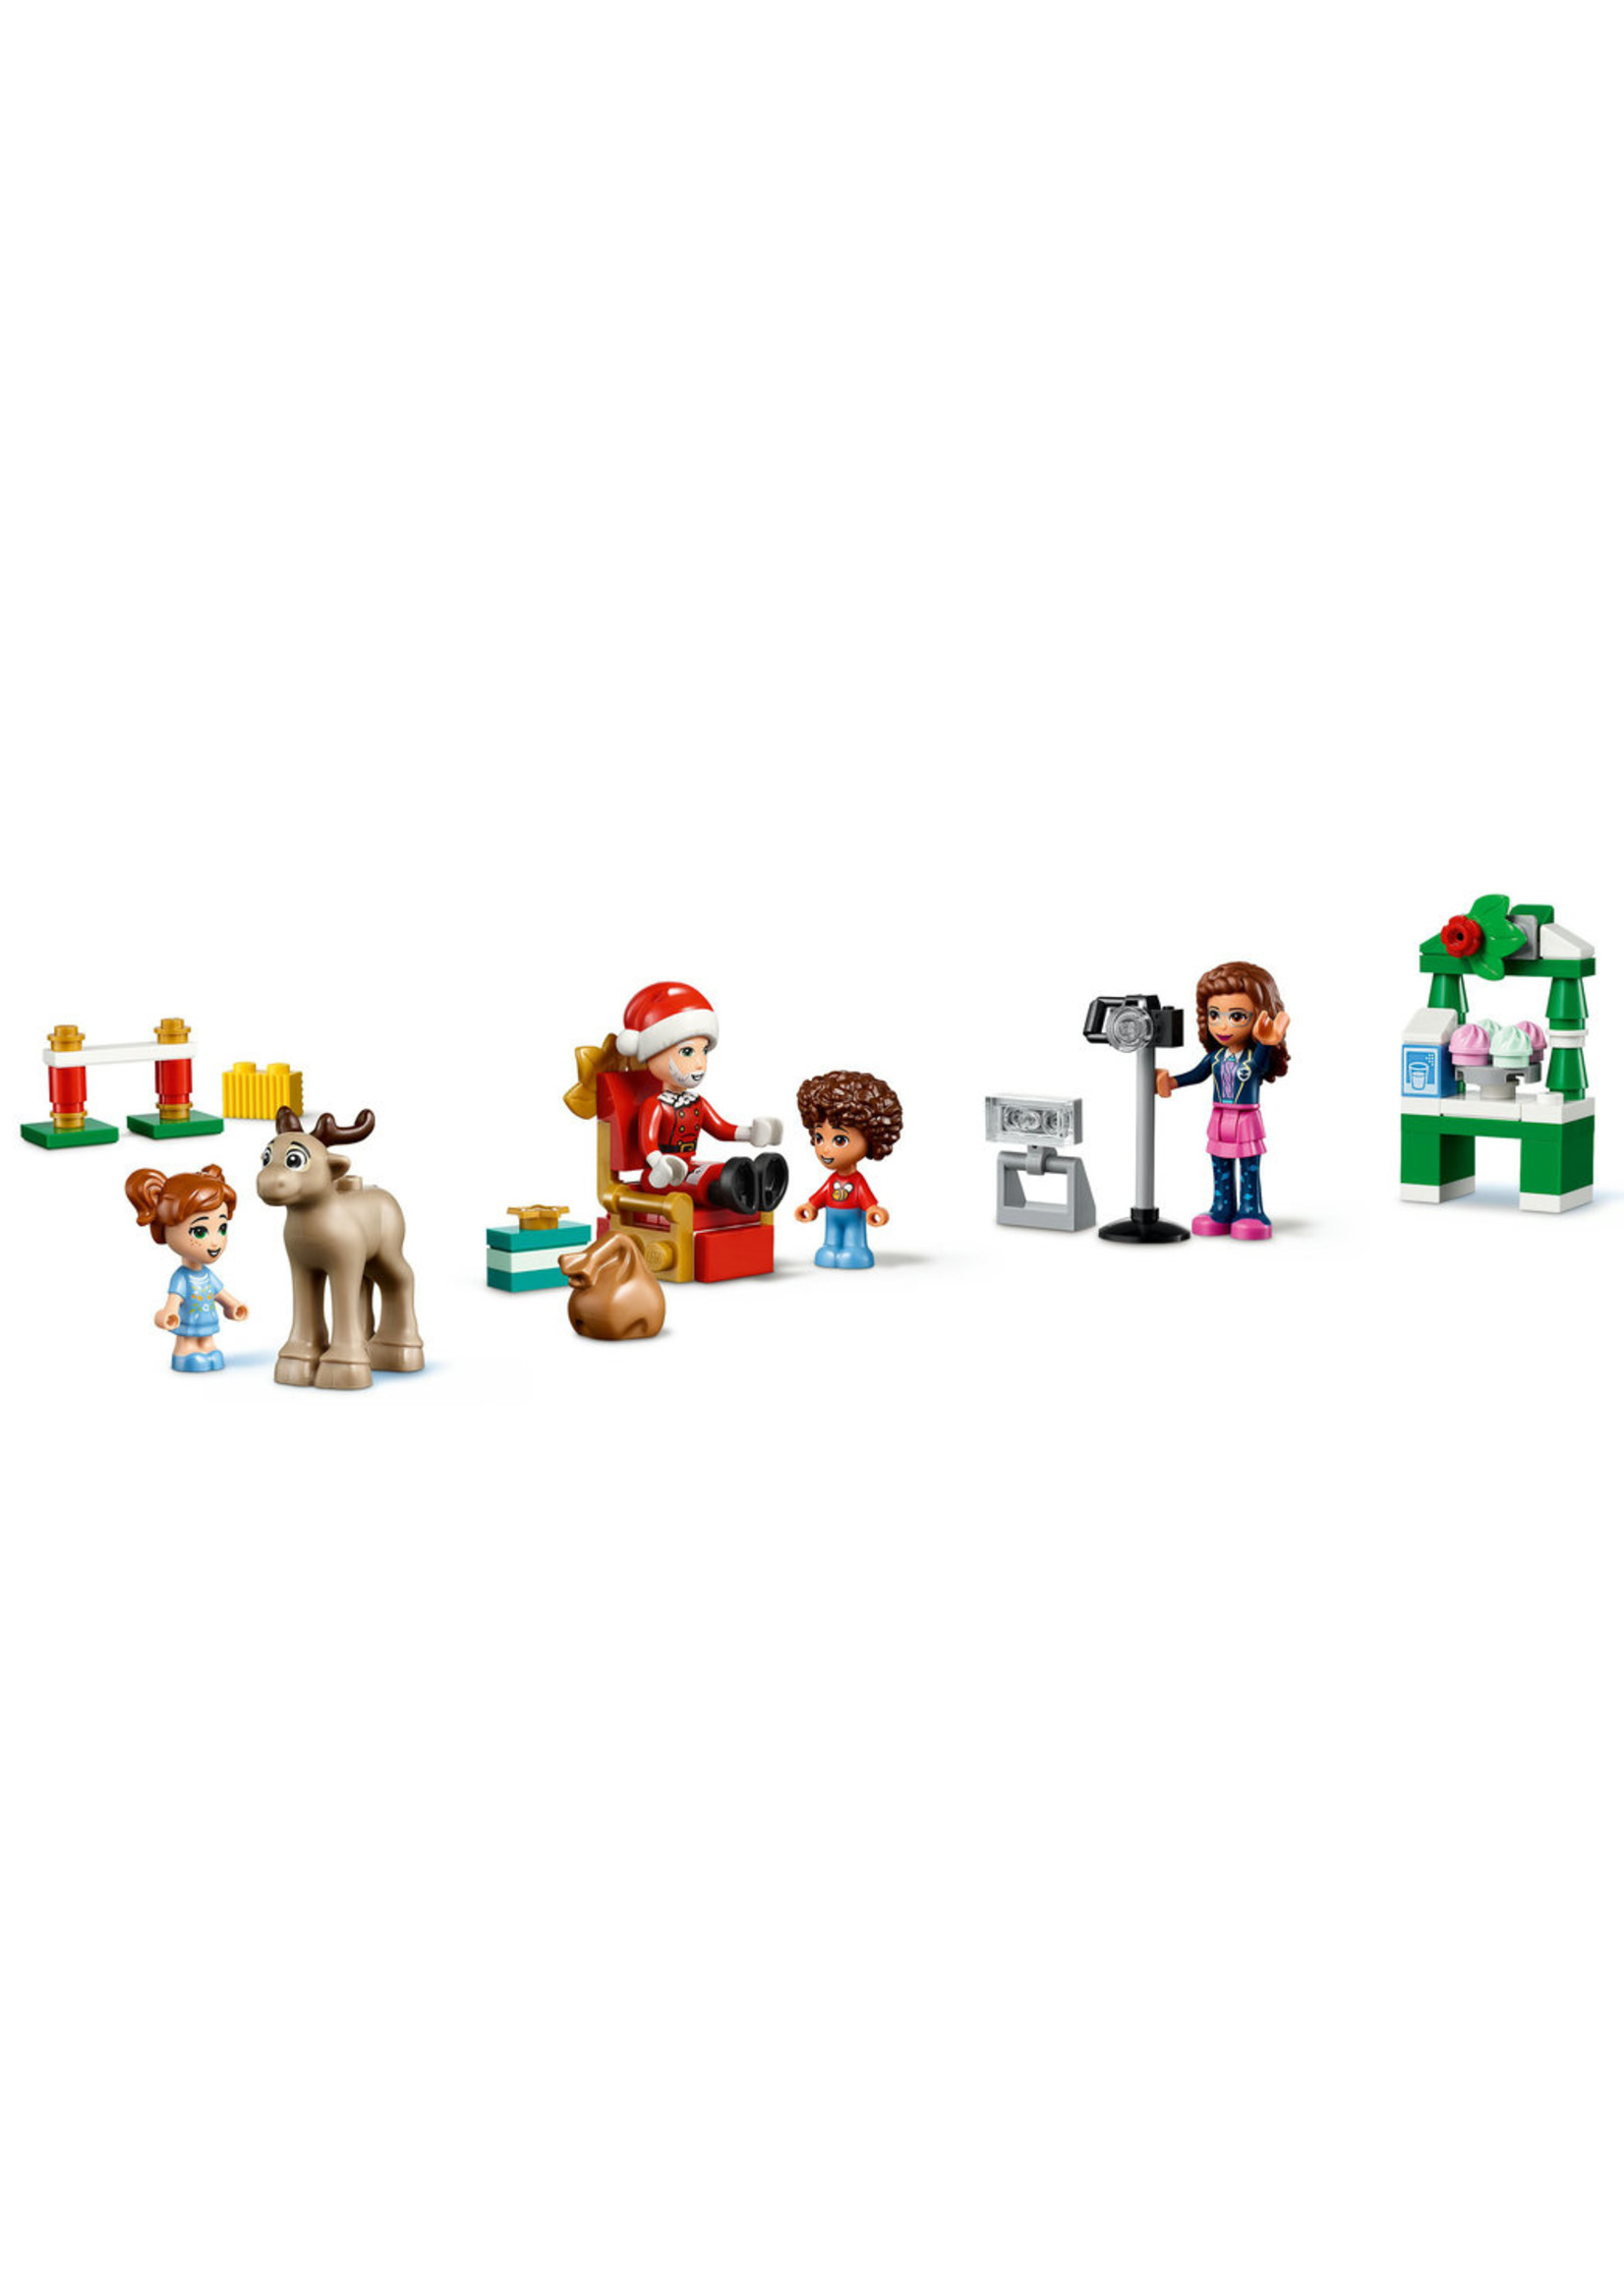 LEGO 41706 - Friends Advent Calendar